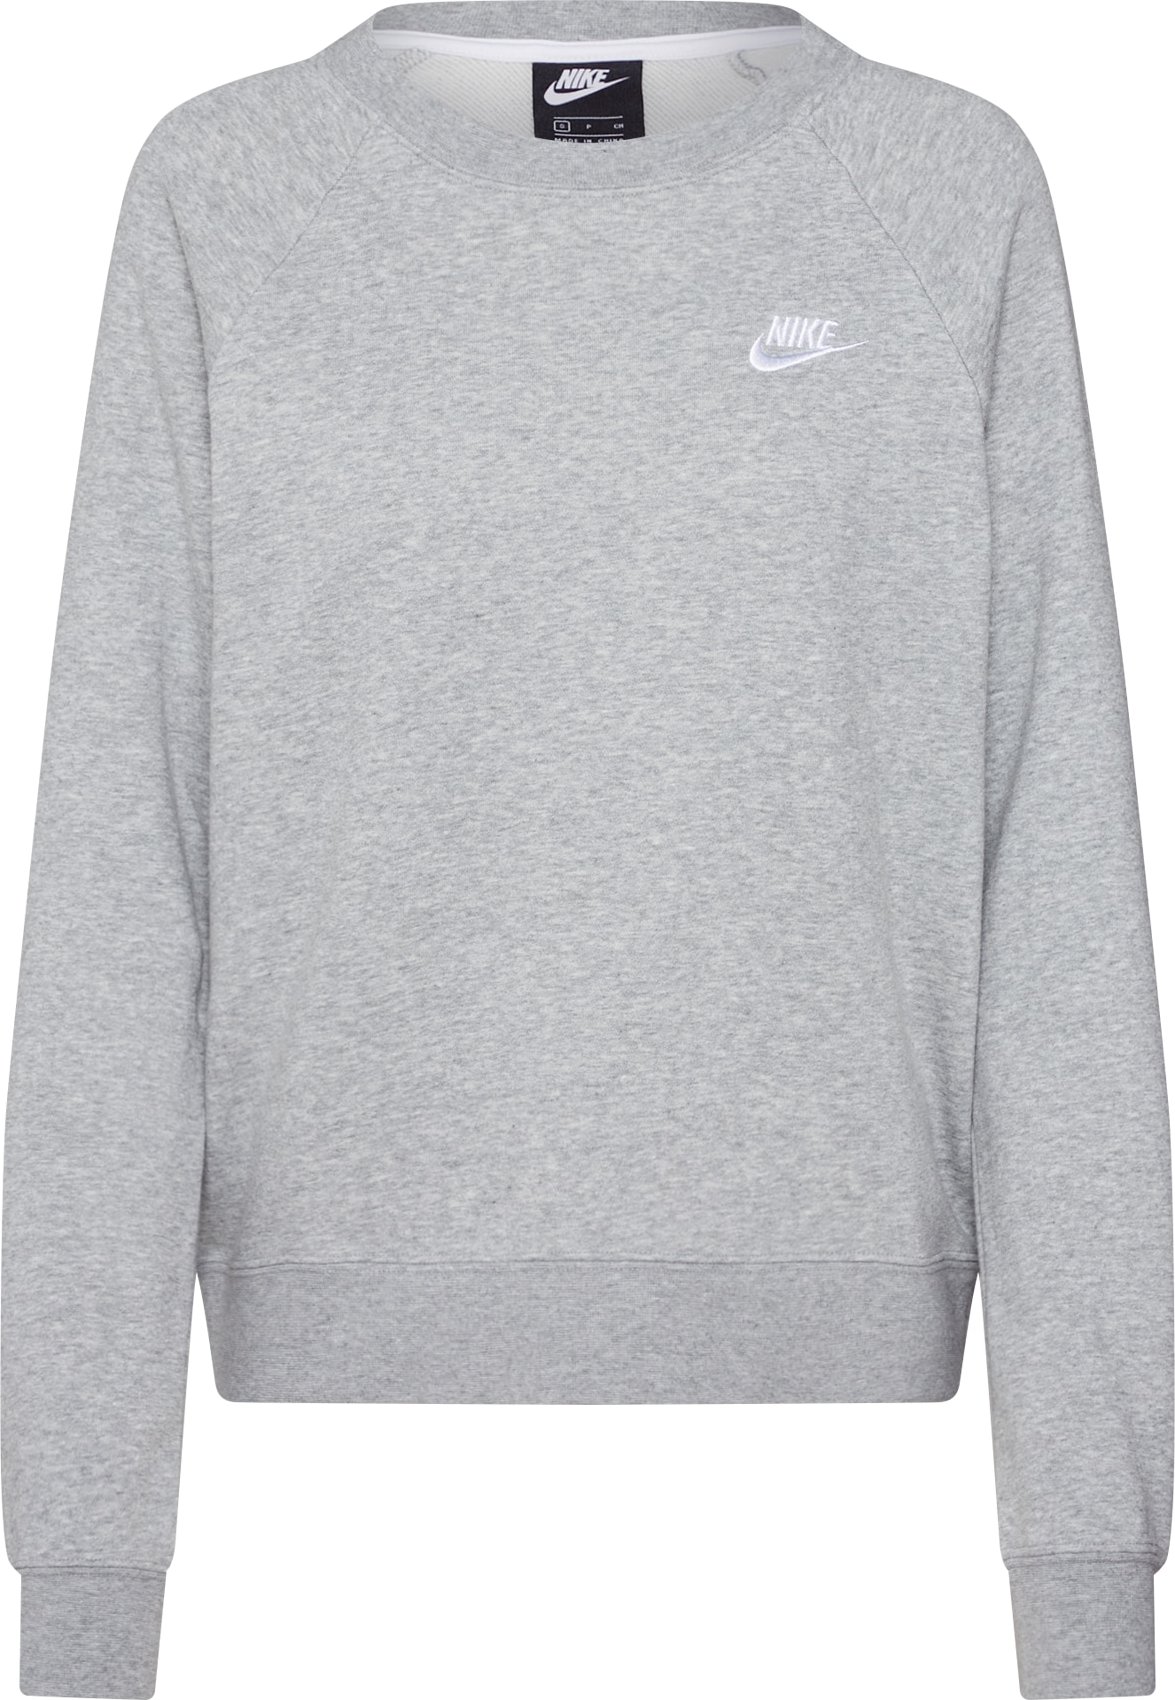 Nike Sportswear Mikina šedá